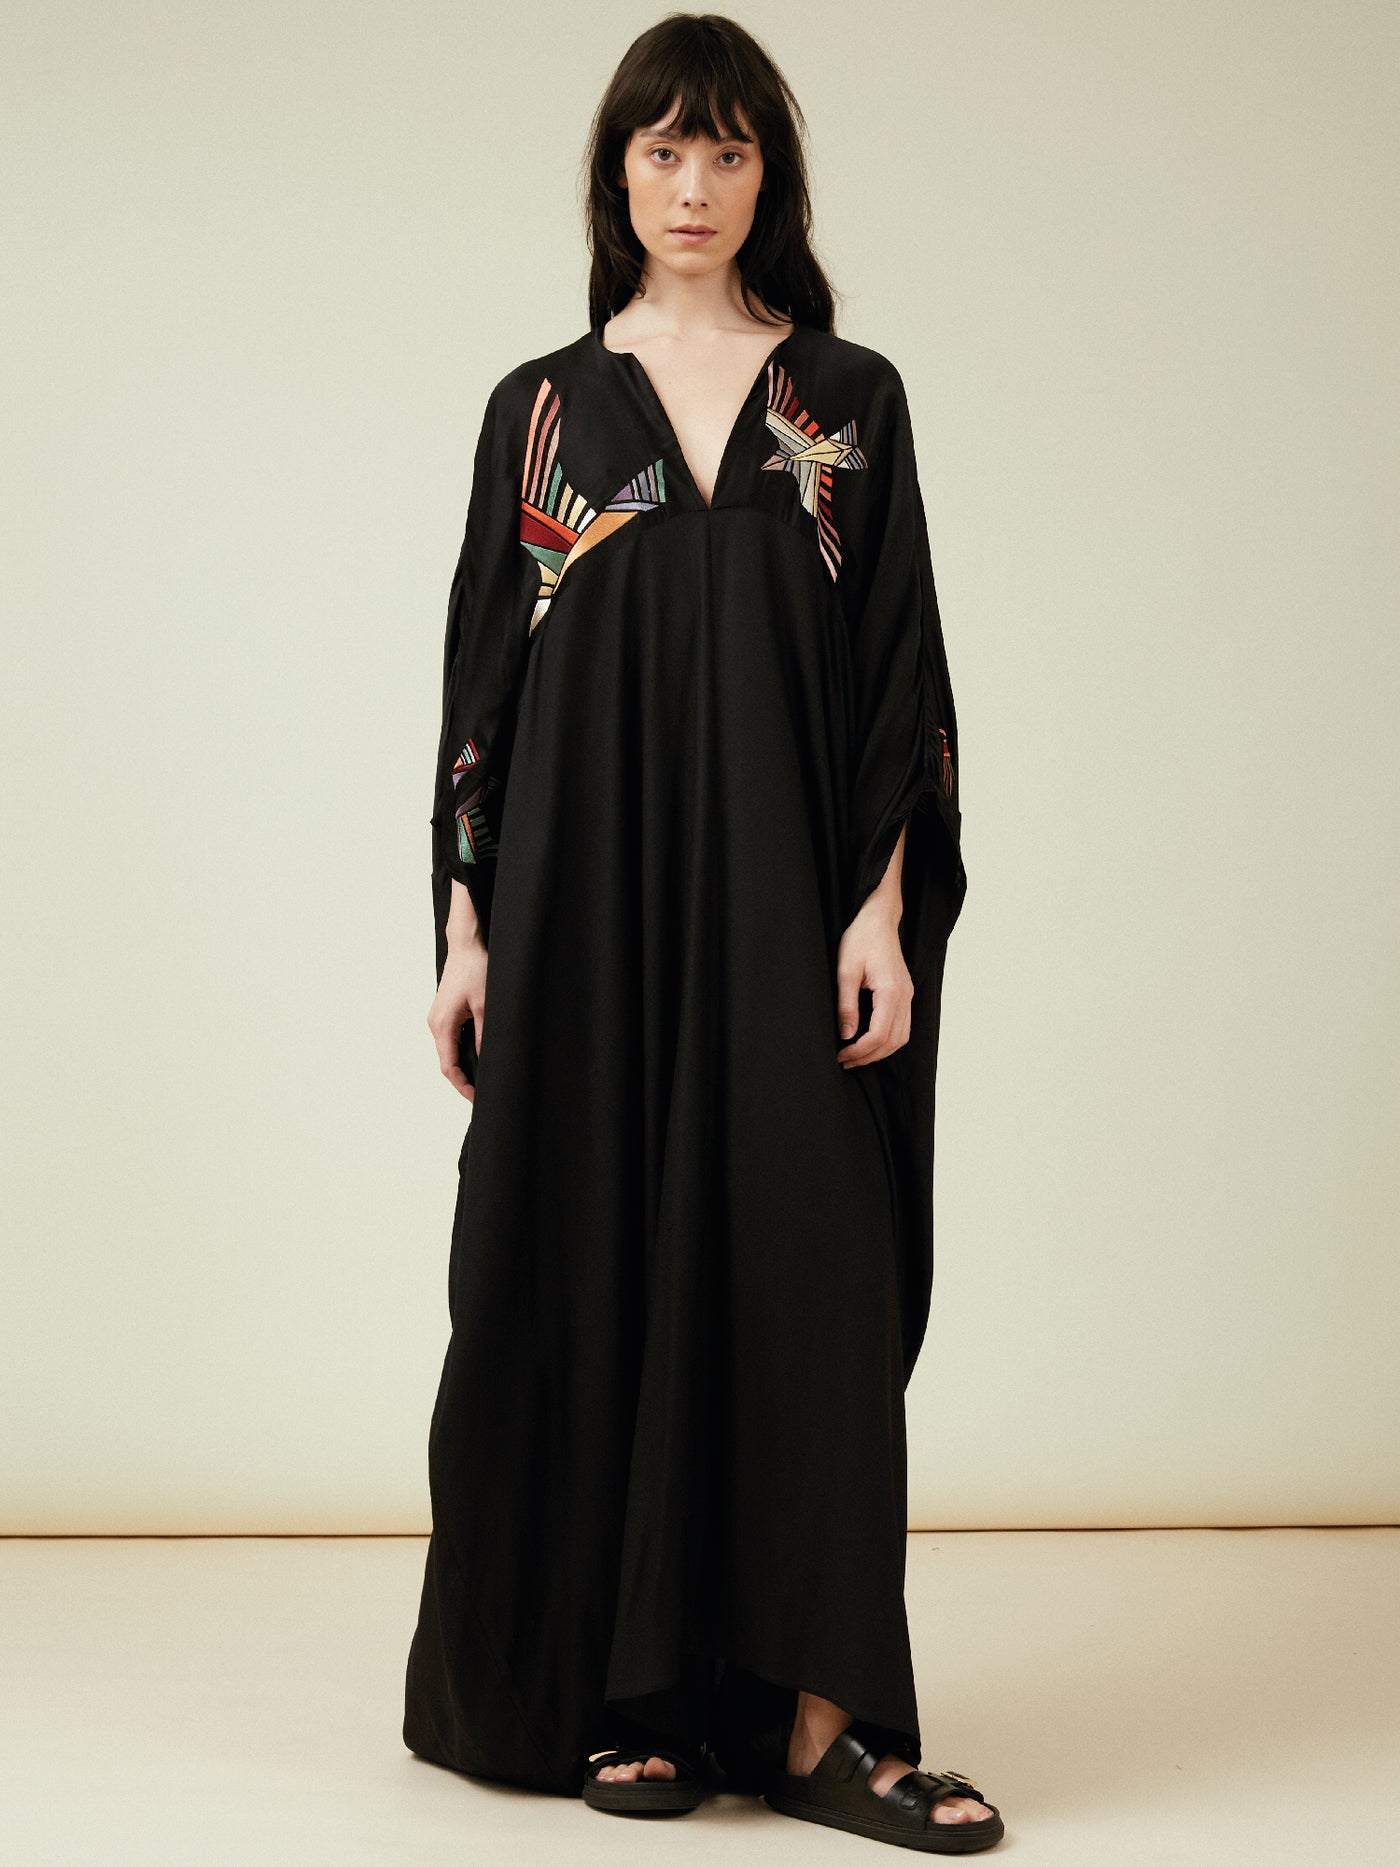 Super kaftan dress black embroidered - COMING SOON